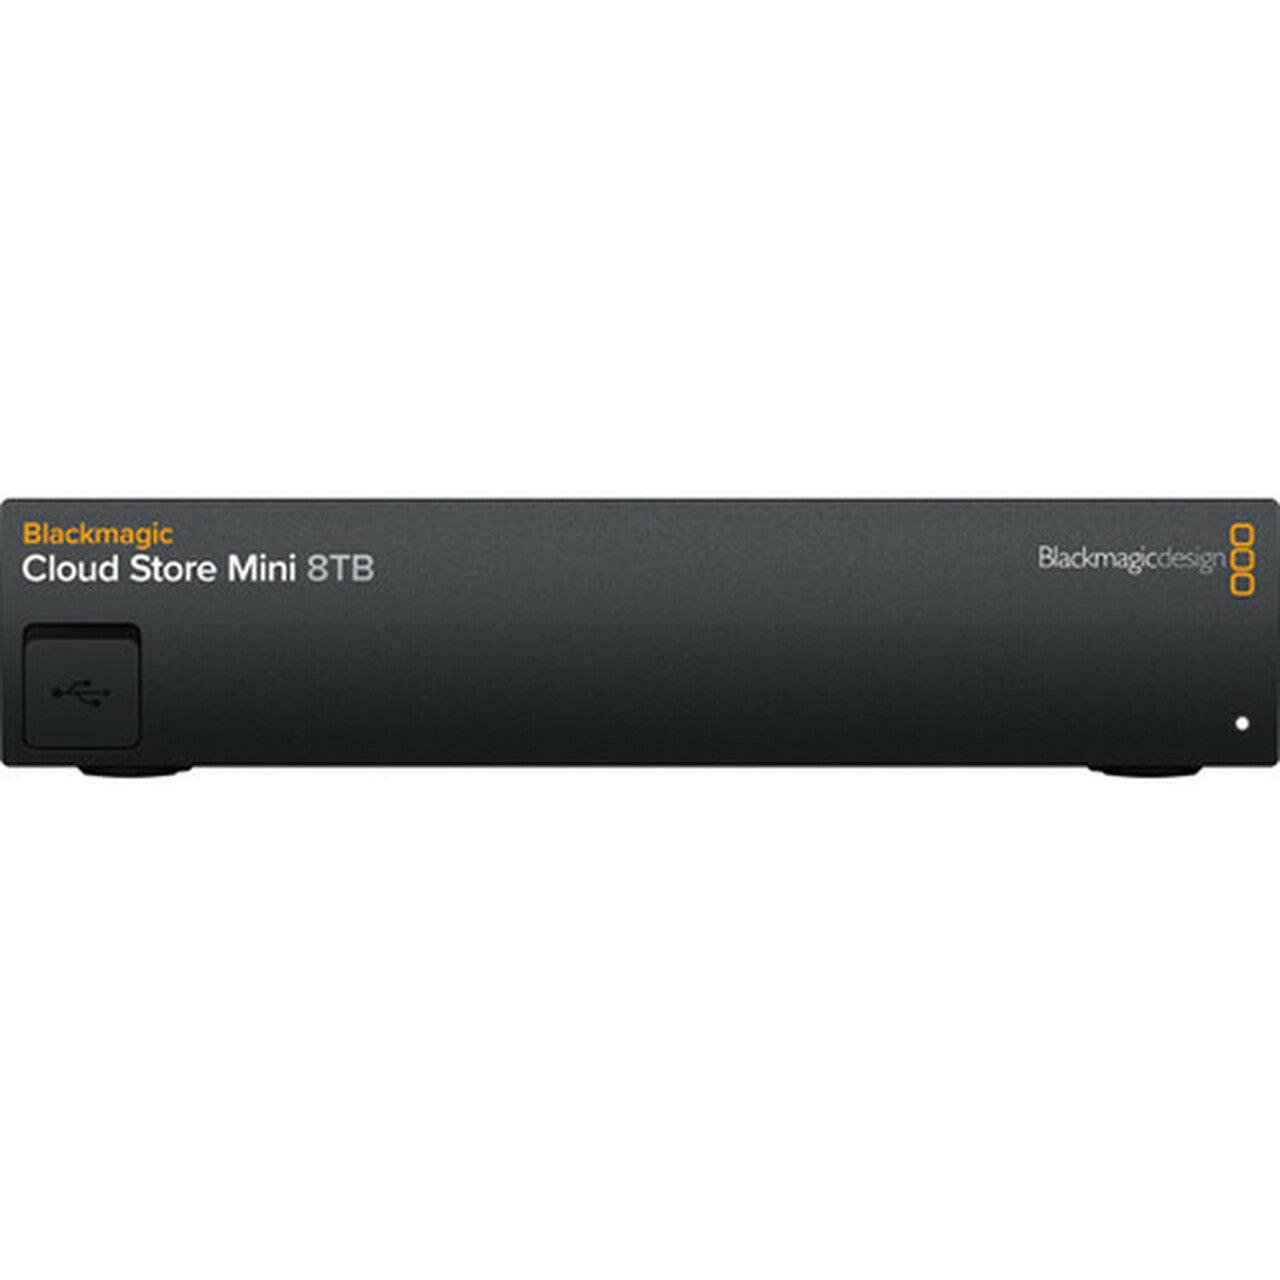 Blackmagic Design Network Storage Blackmagic Cloud Store Mini 8TB